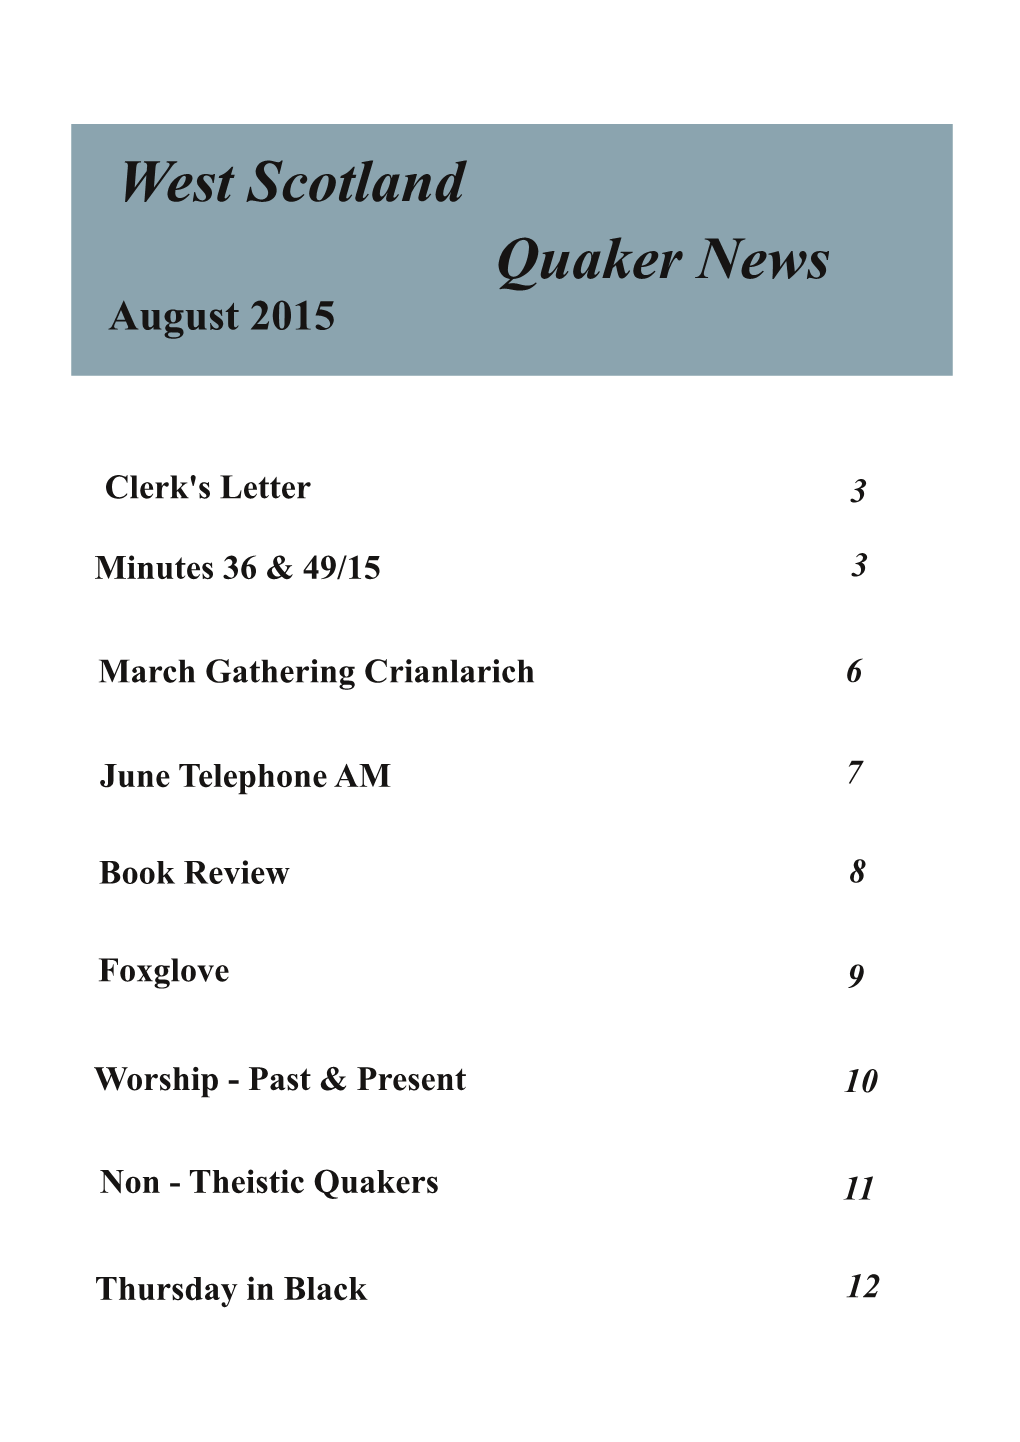 West Scotland Quaker News August 2015